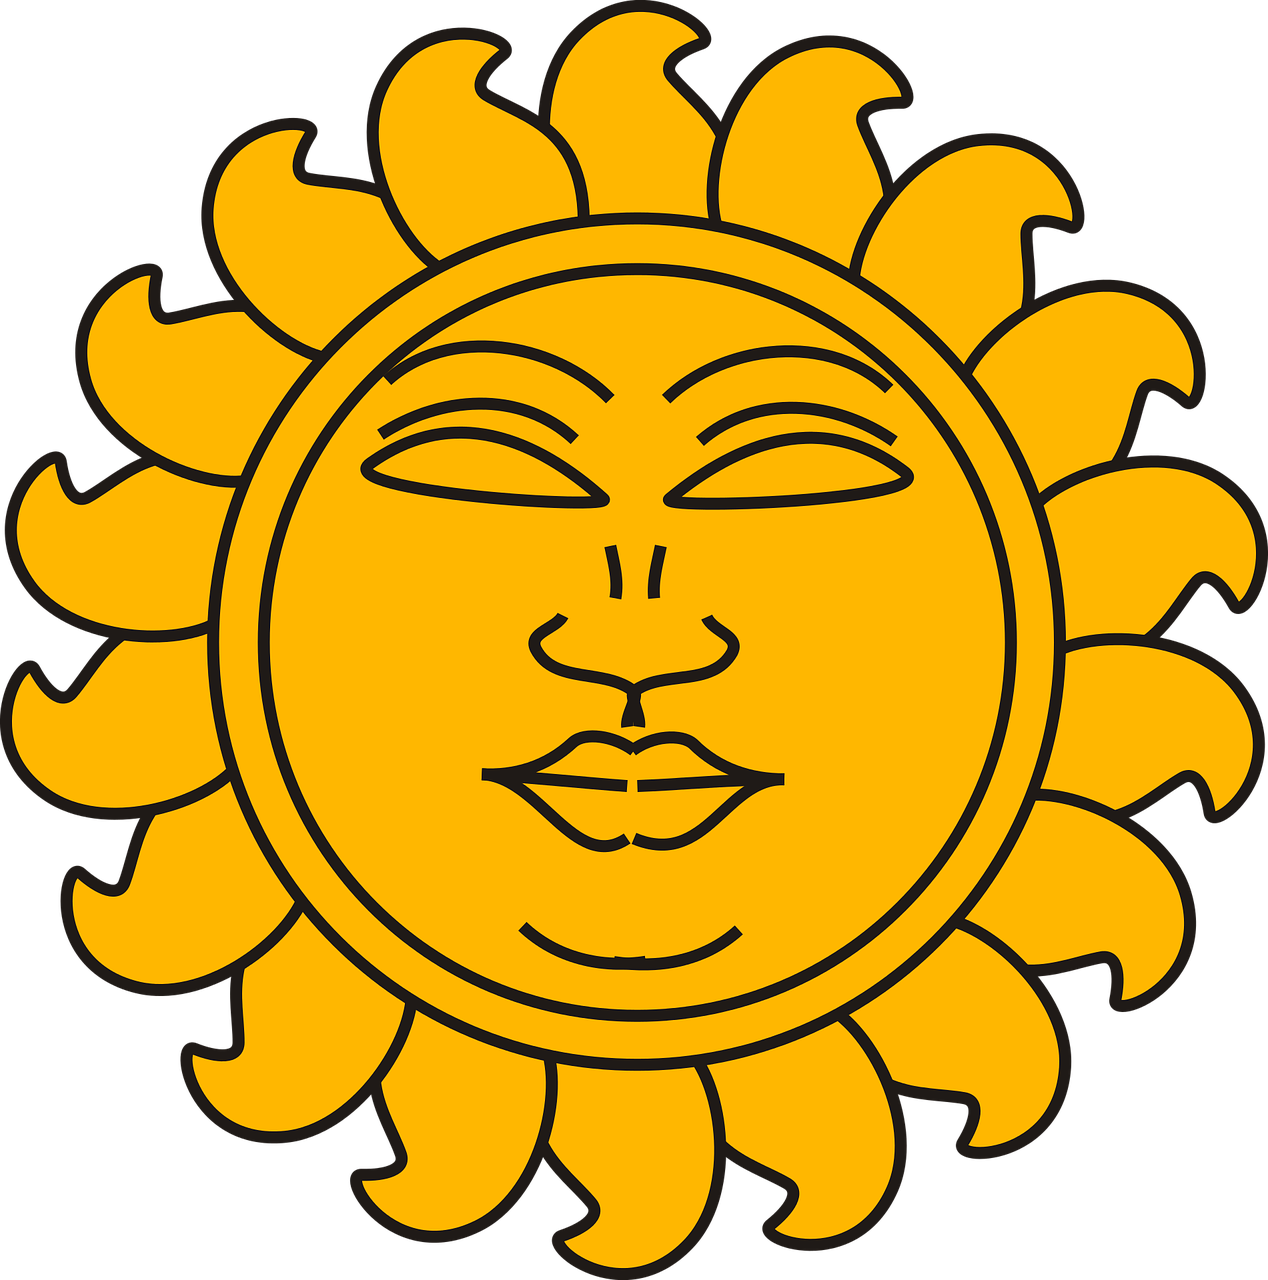 day sun symbol free photo